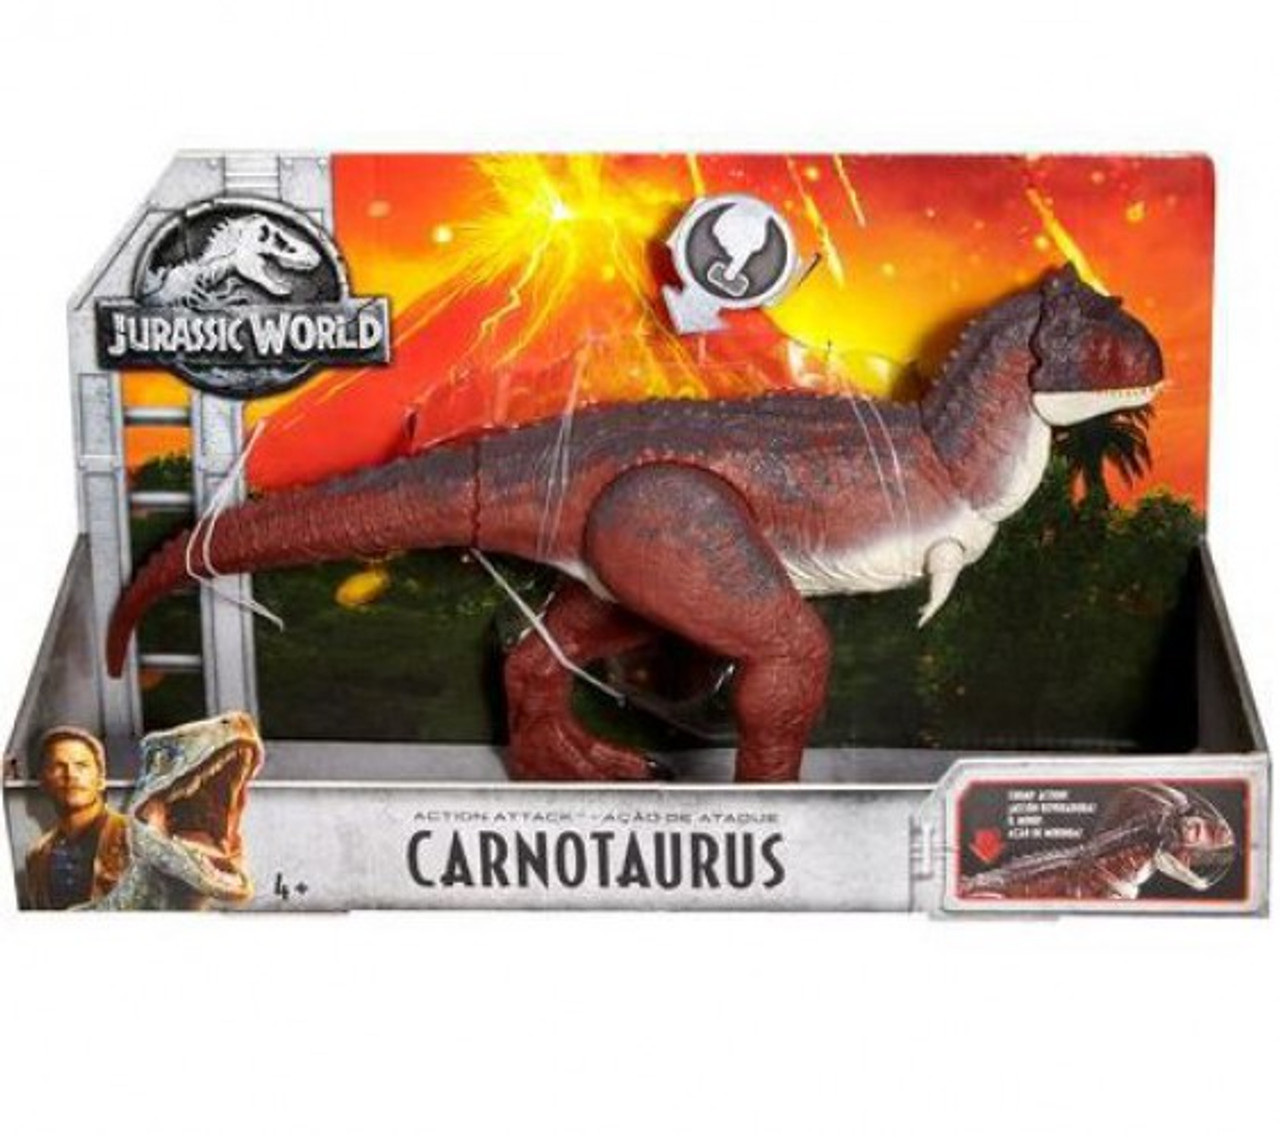 Jurassic World Fallen Kingdom Action Attack Carnotaurus Action Figure ...